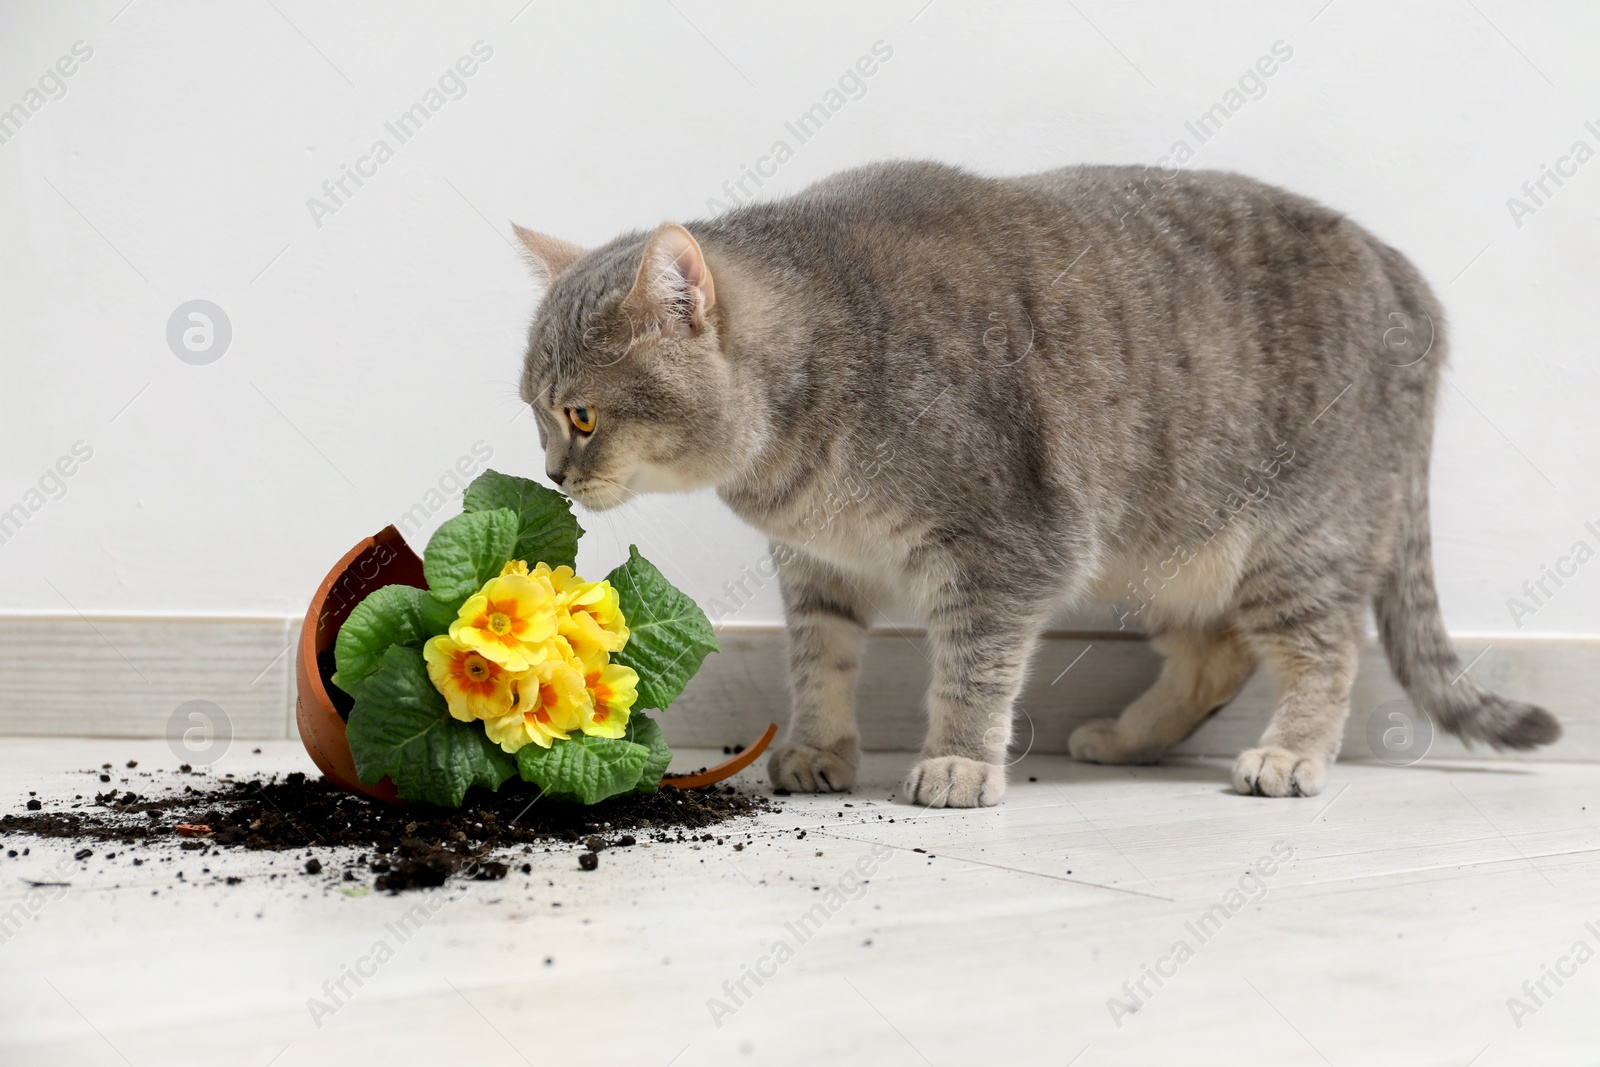 Photo of Cute cat and broken flower pot with primrose plant on floor indoors